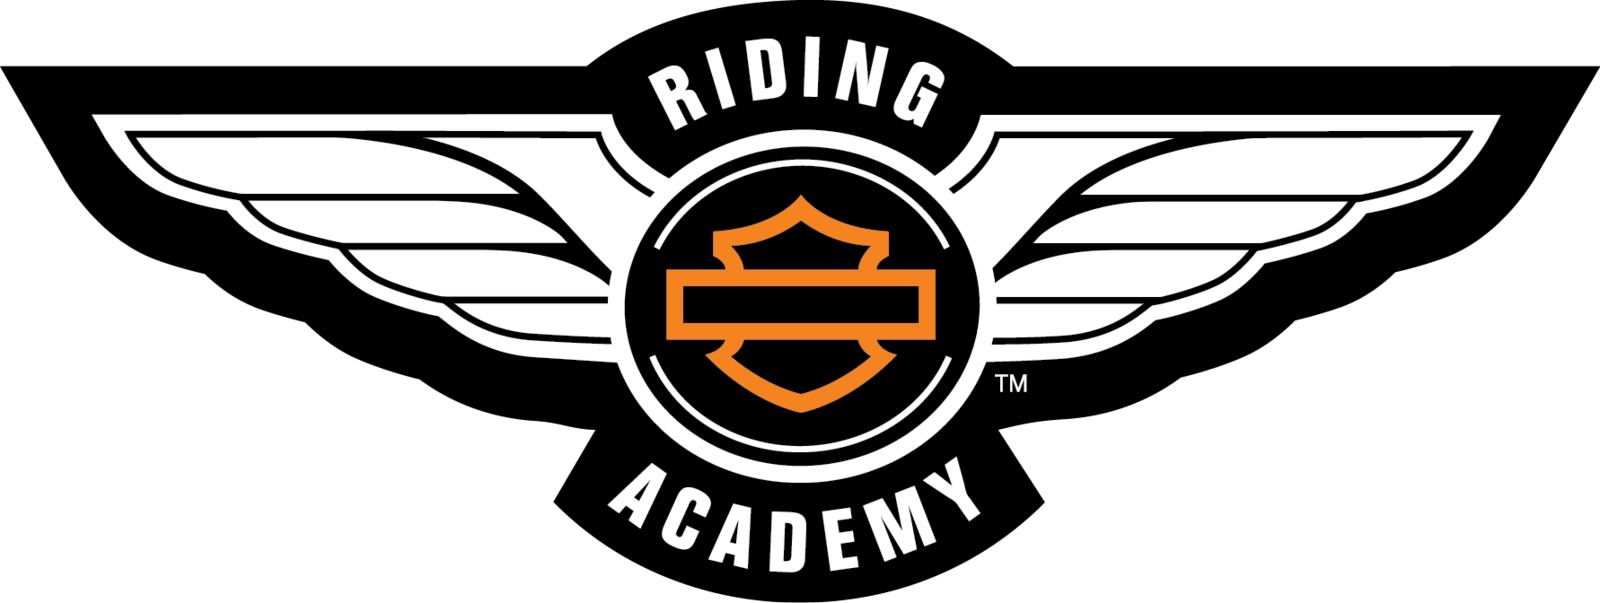 Harley Davidson Logo Riding Academy Png PNG Image